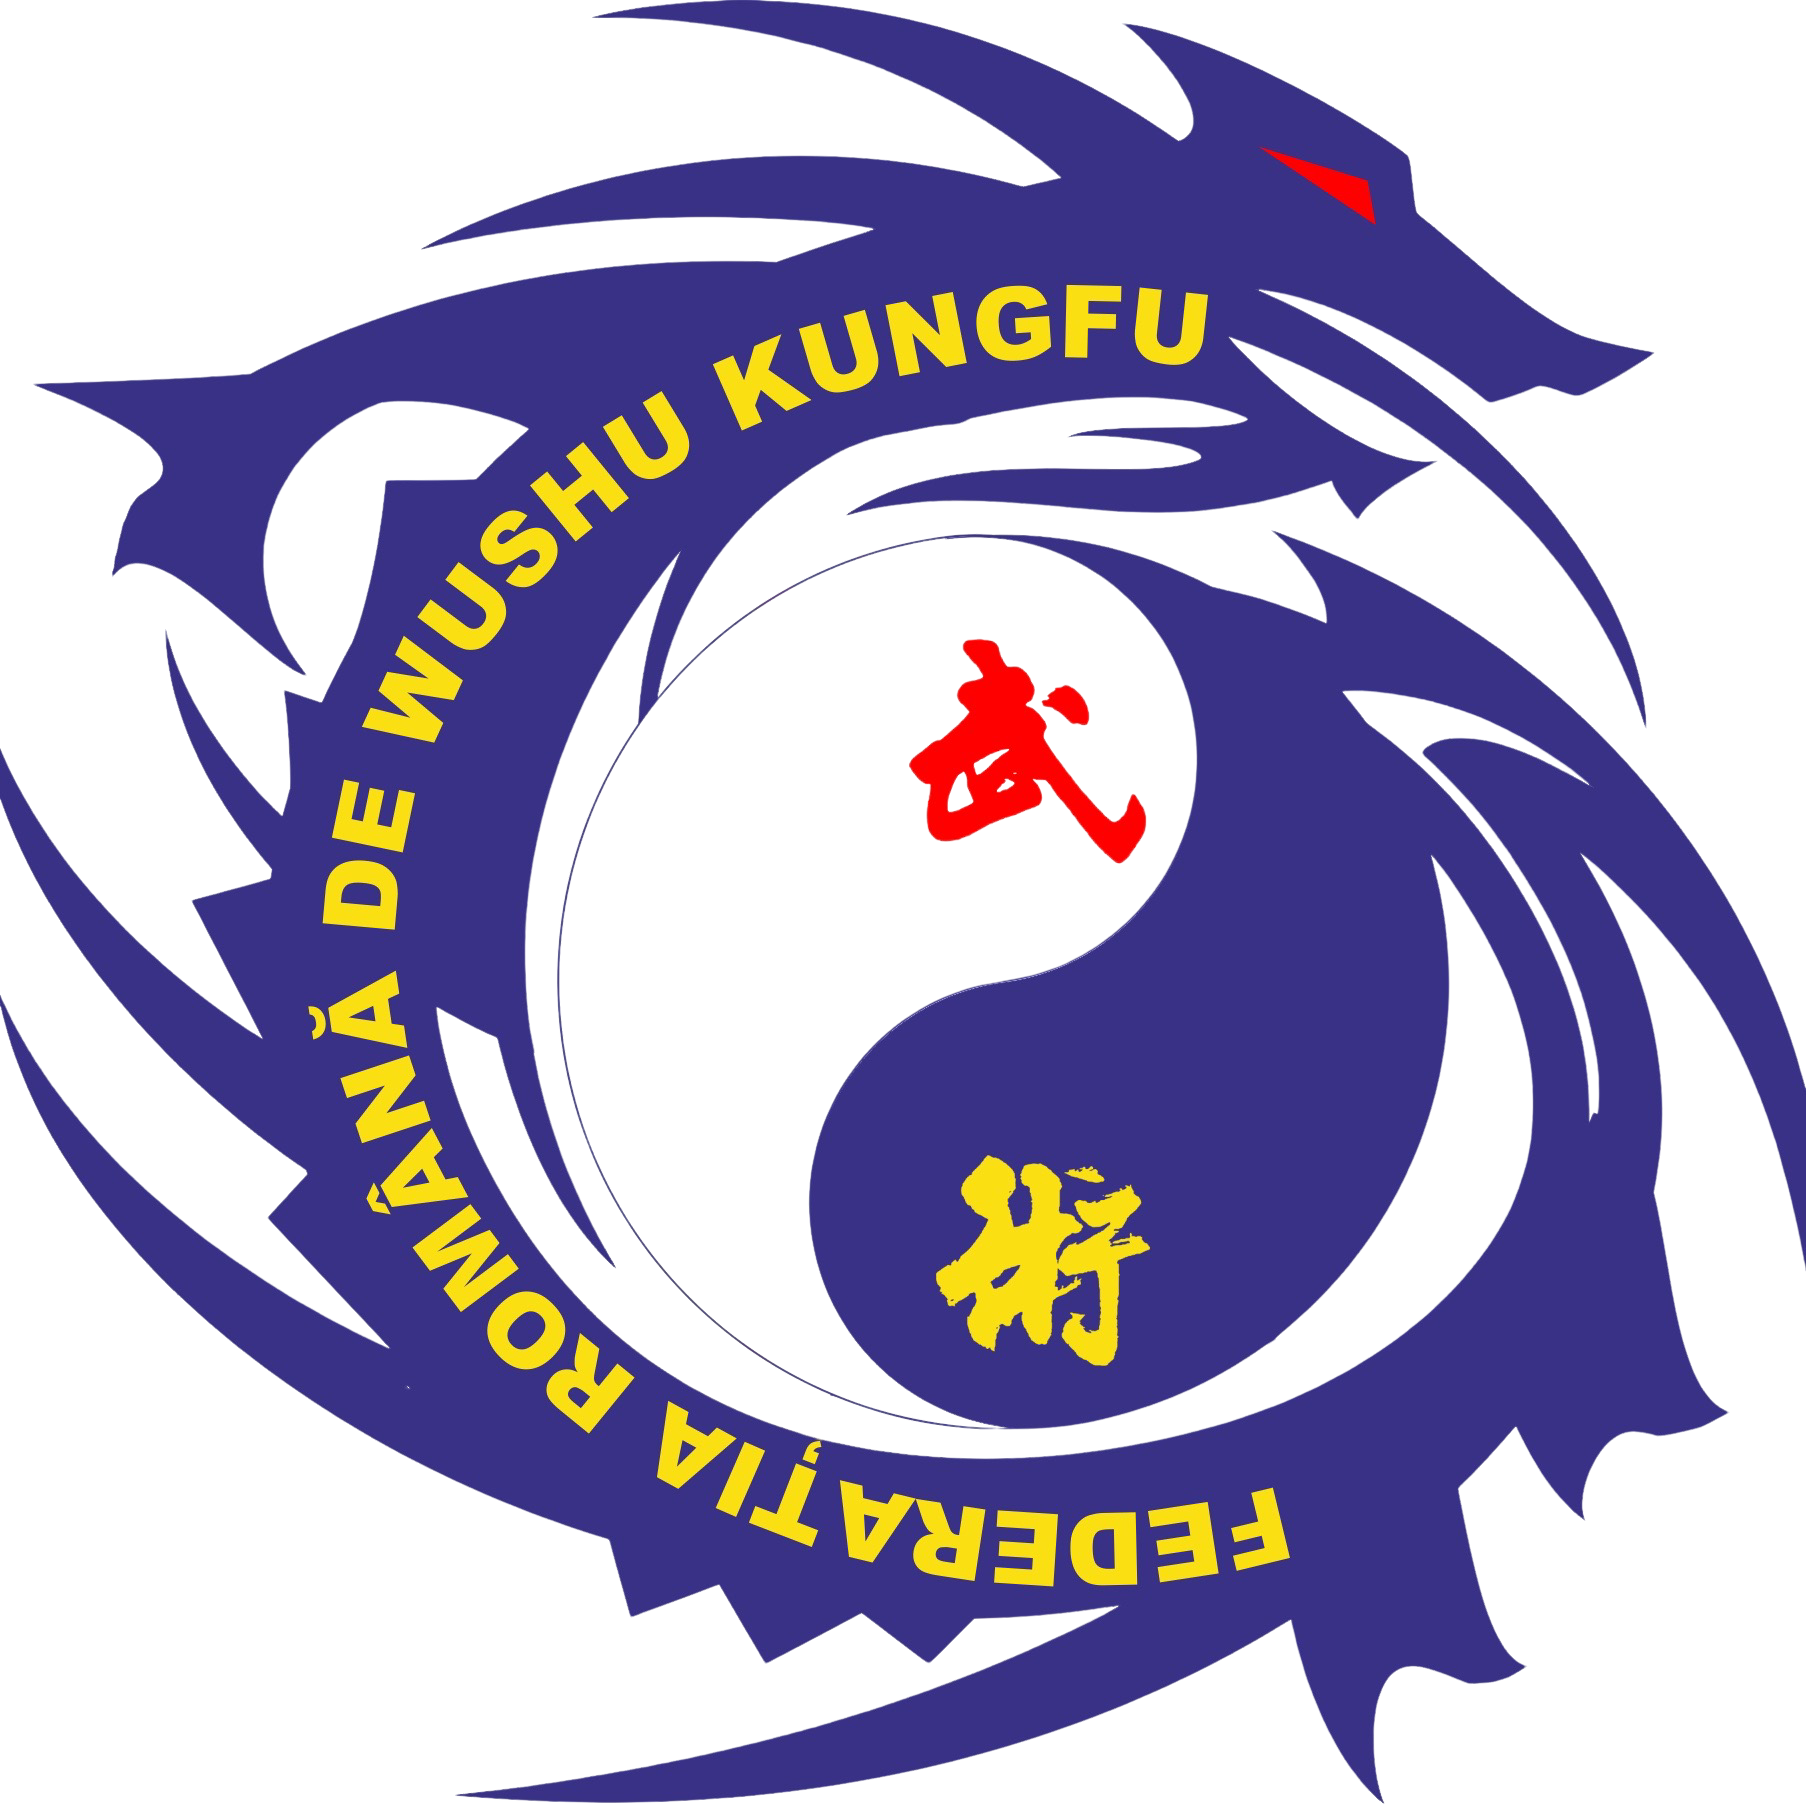 FEDERAȚIA ROMÂNĂ DE WUSHU KUNGFU logo